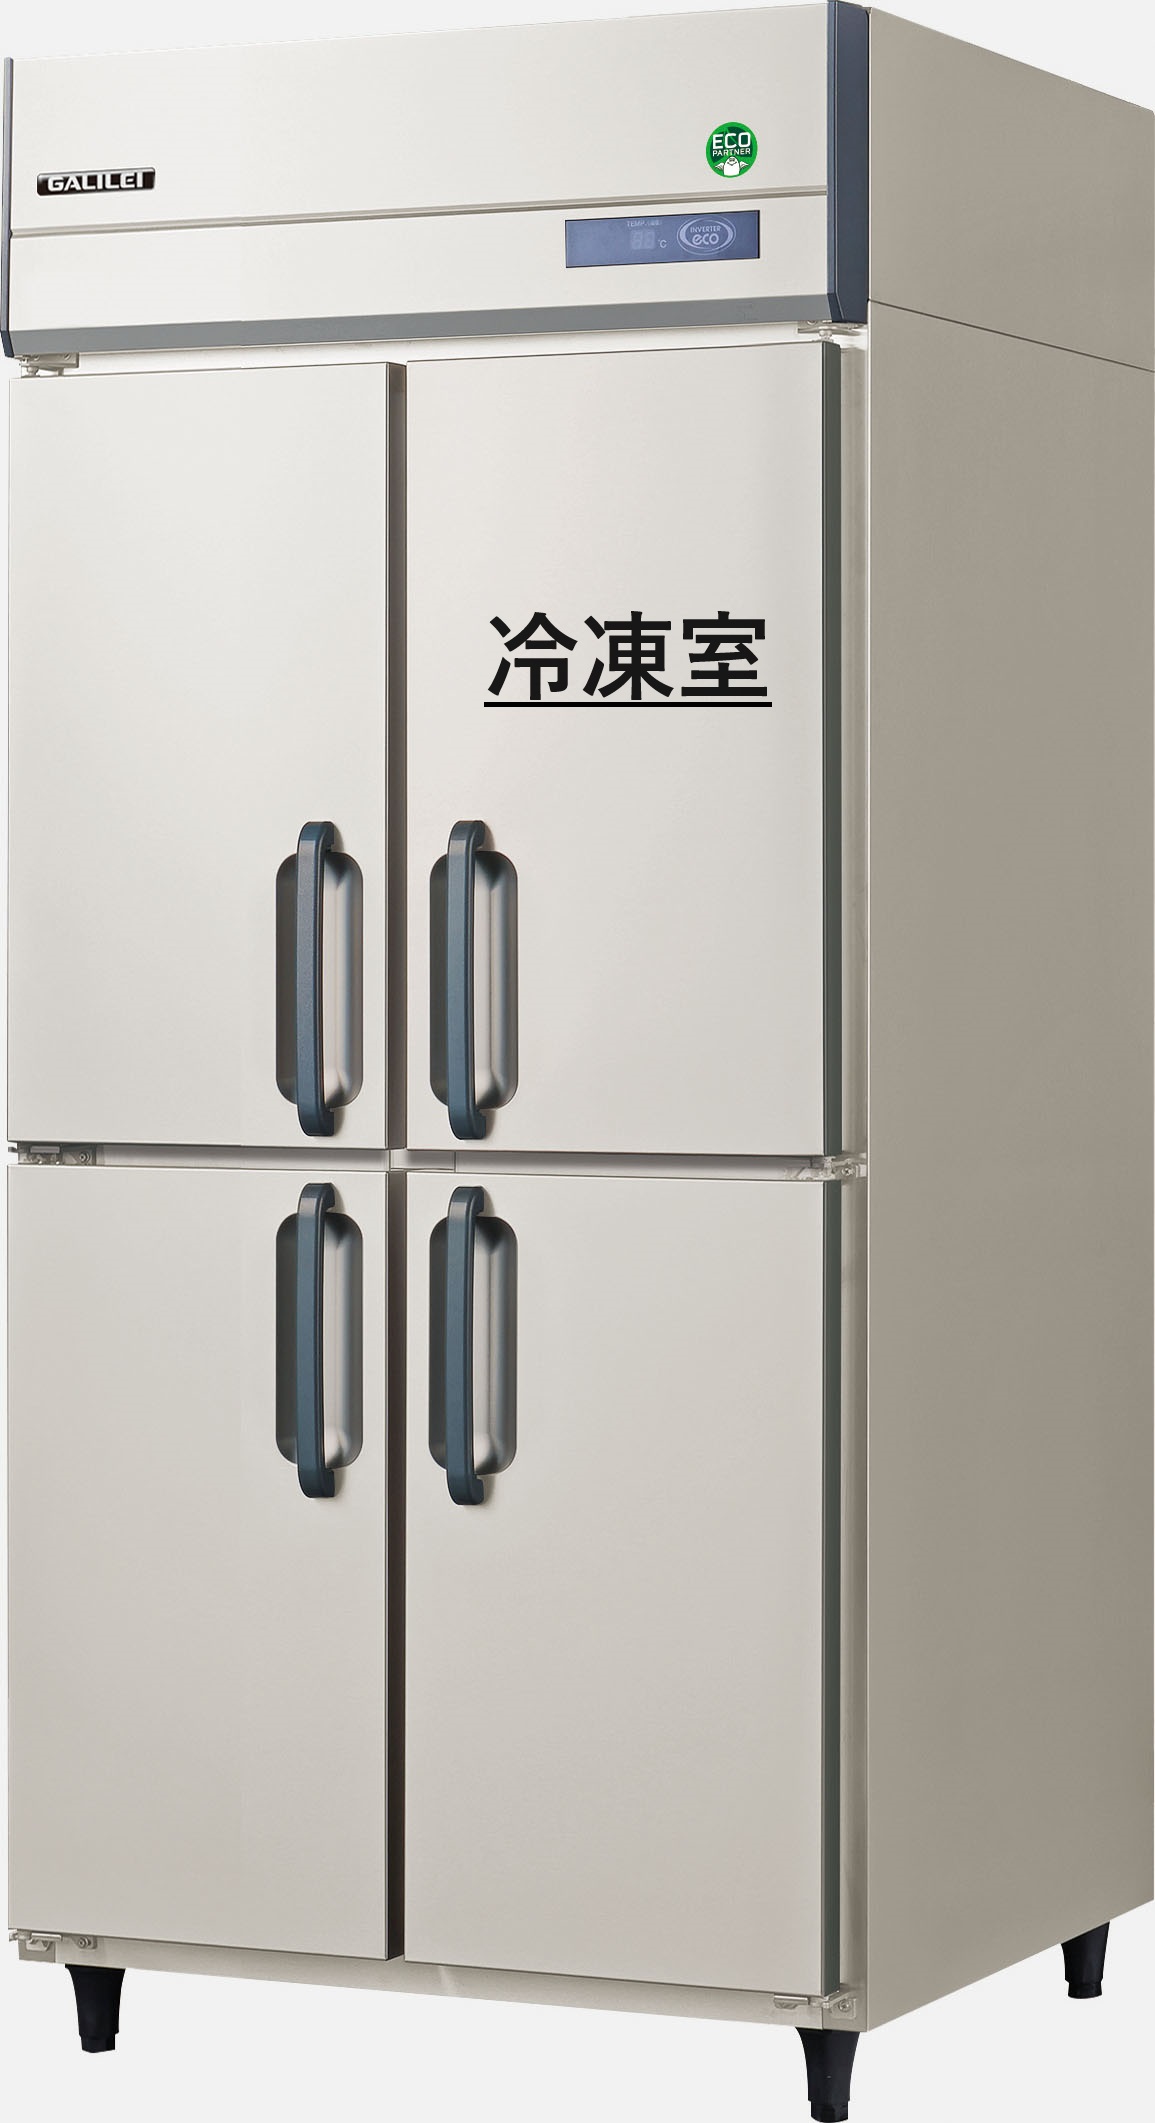 GRD-091PX フクシマガリレイ 縦型業務用冷凍冷蔵庫(ノンフロン